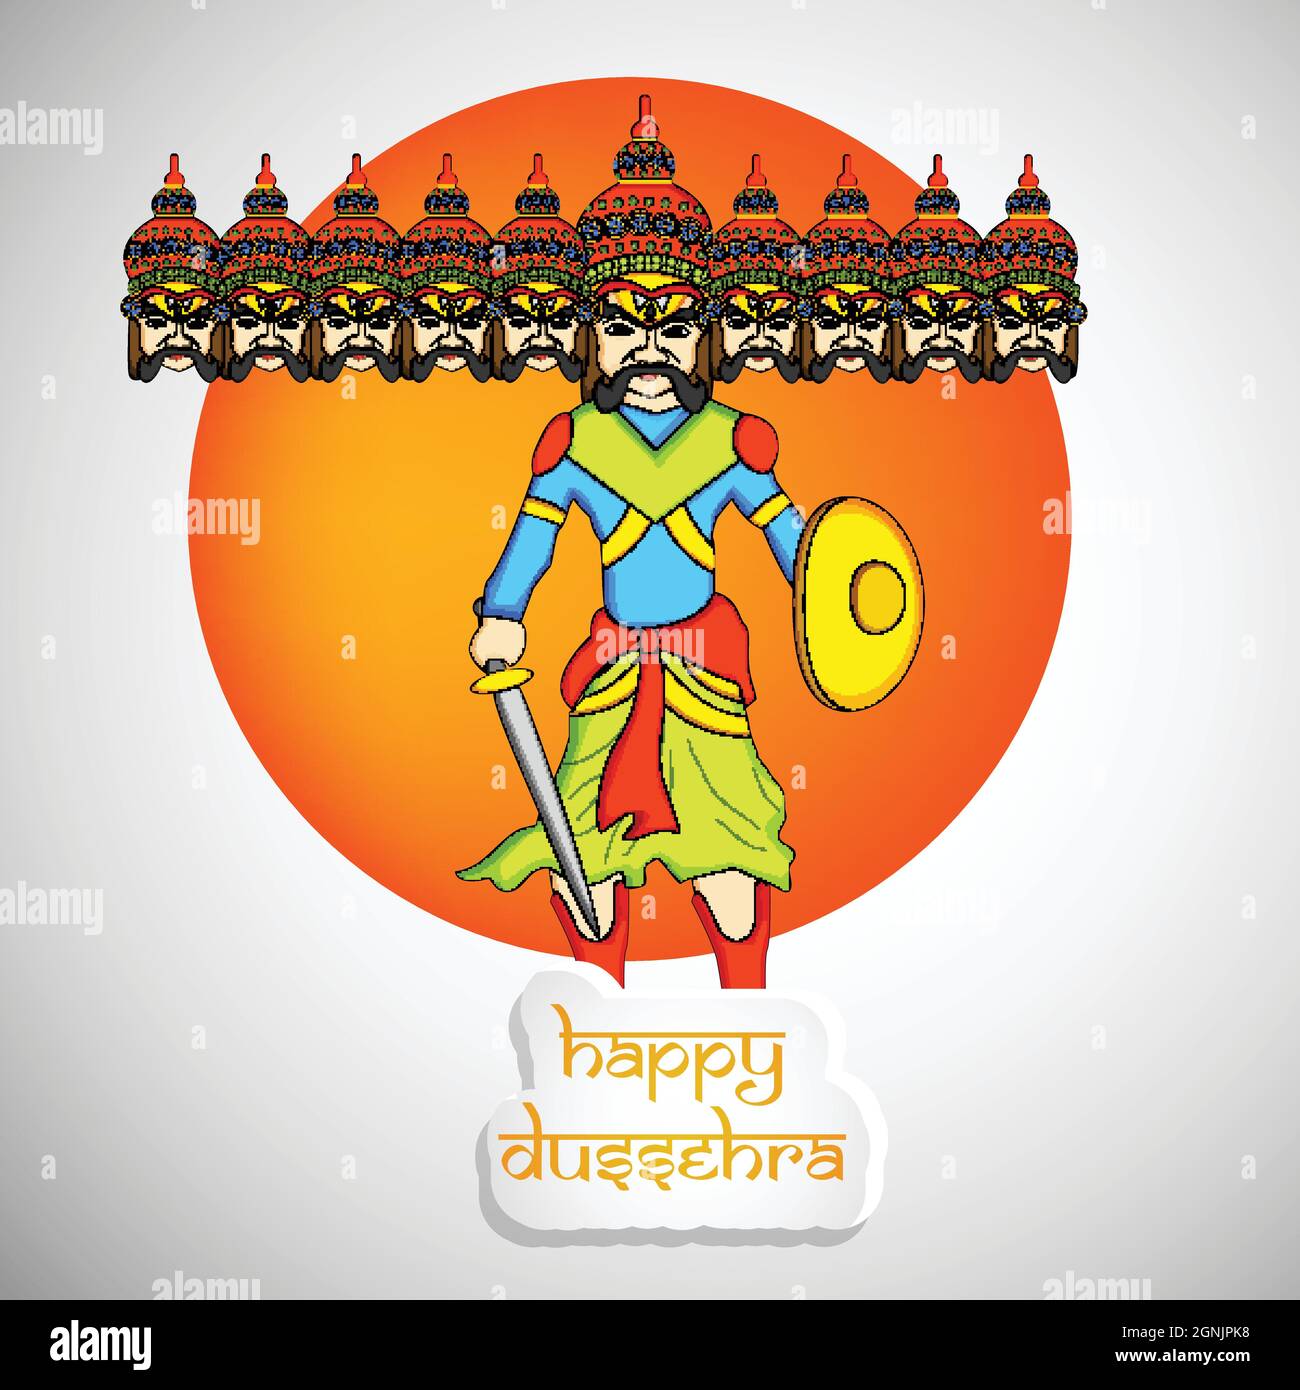 Dussehra Festival Hindu Background Stock Vector Image & Art - Alamy